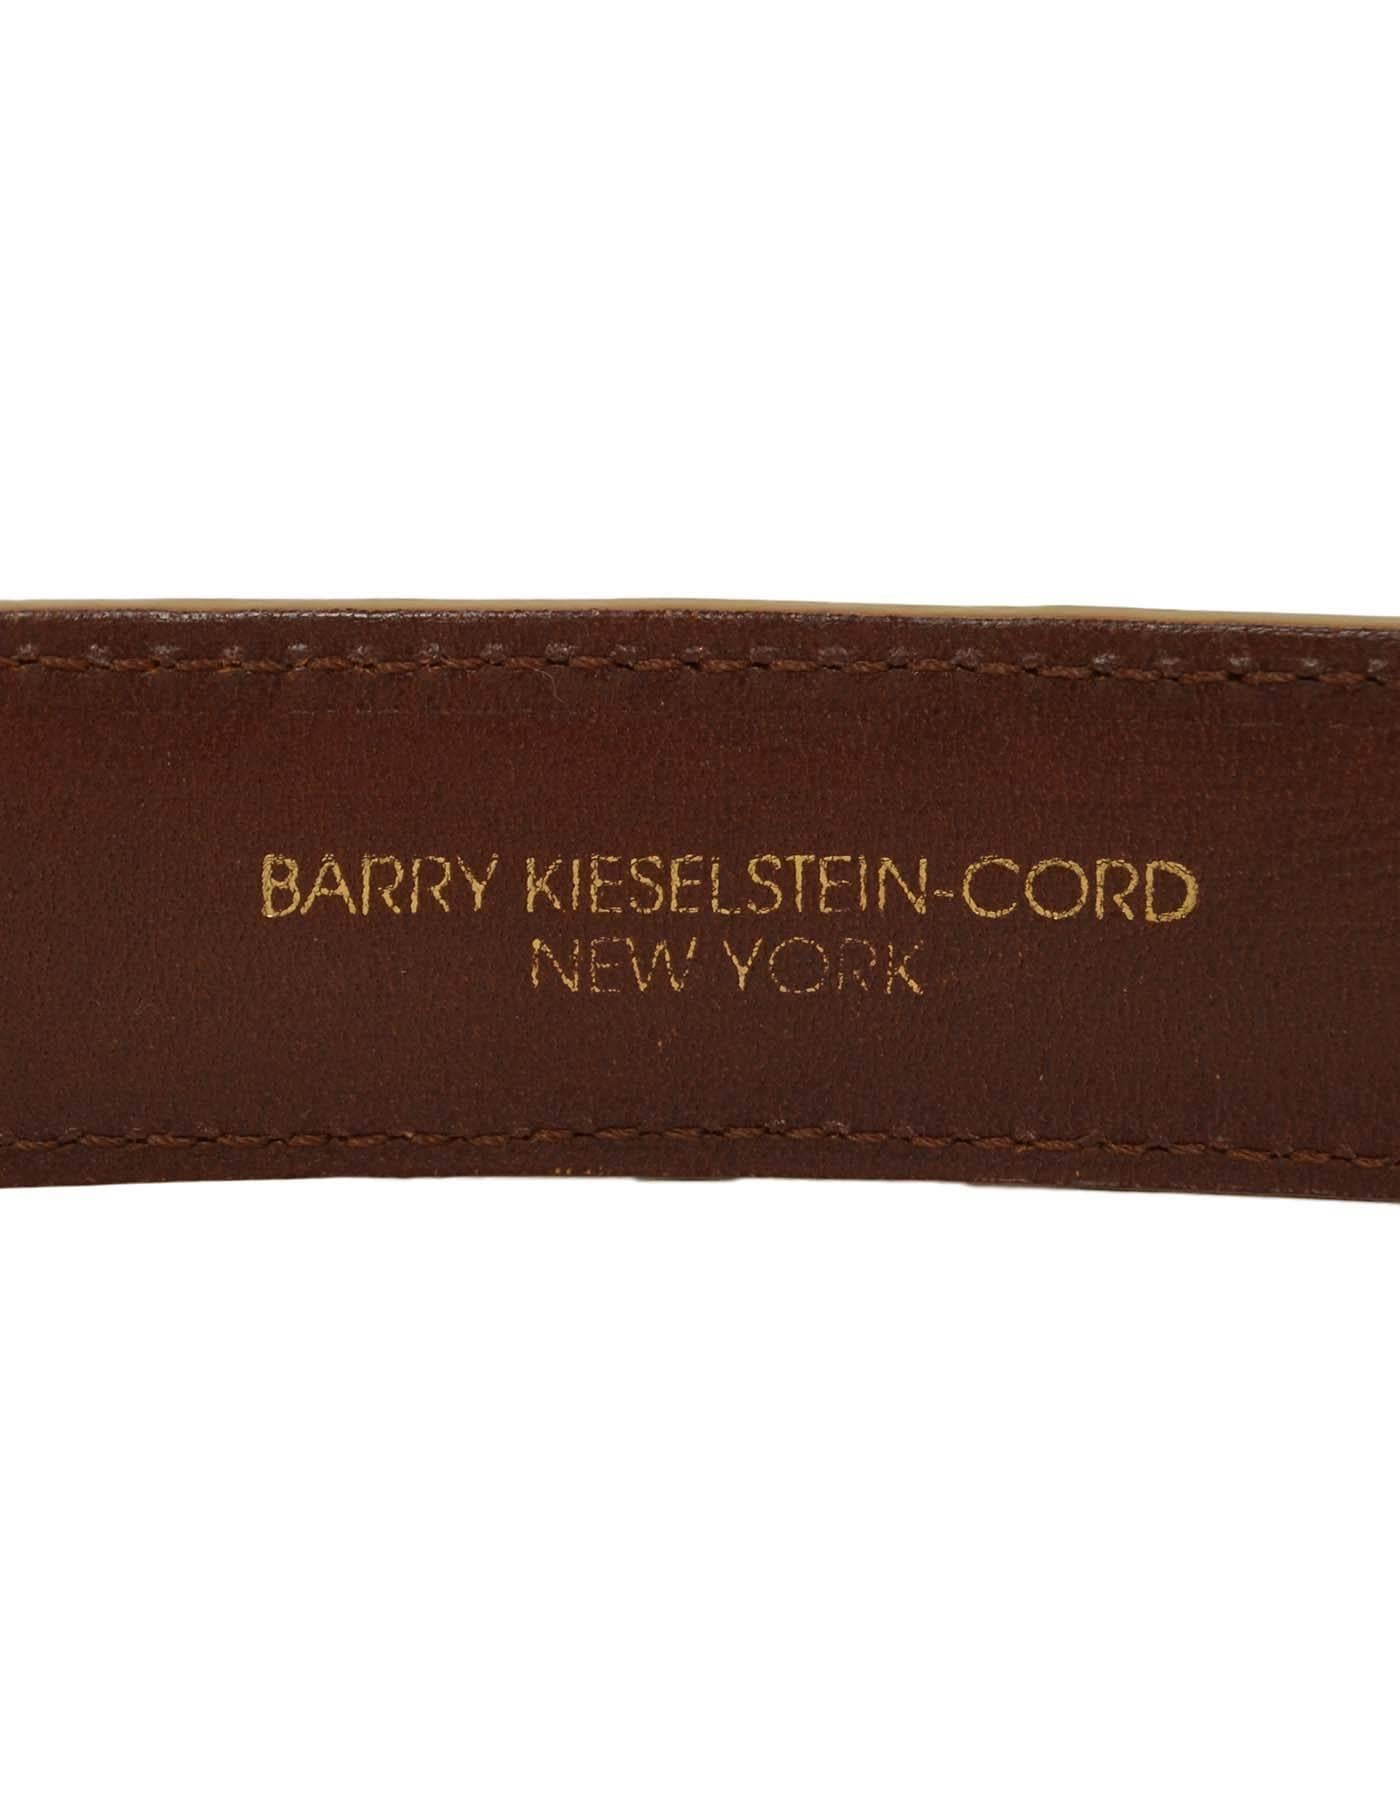 Kieselstein-Cord Beige Alligator Skin Belt Strap sz 85 2